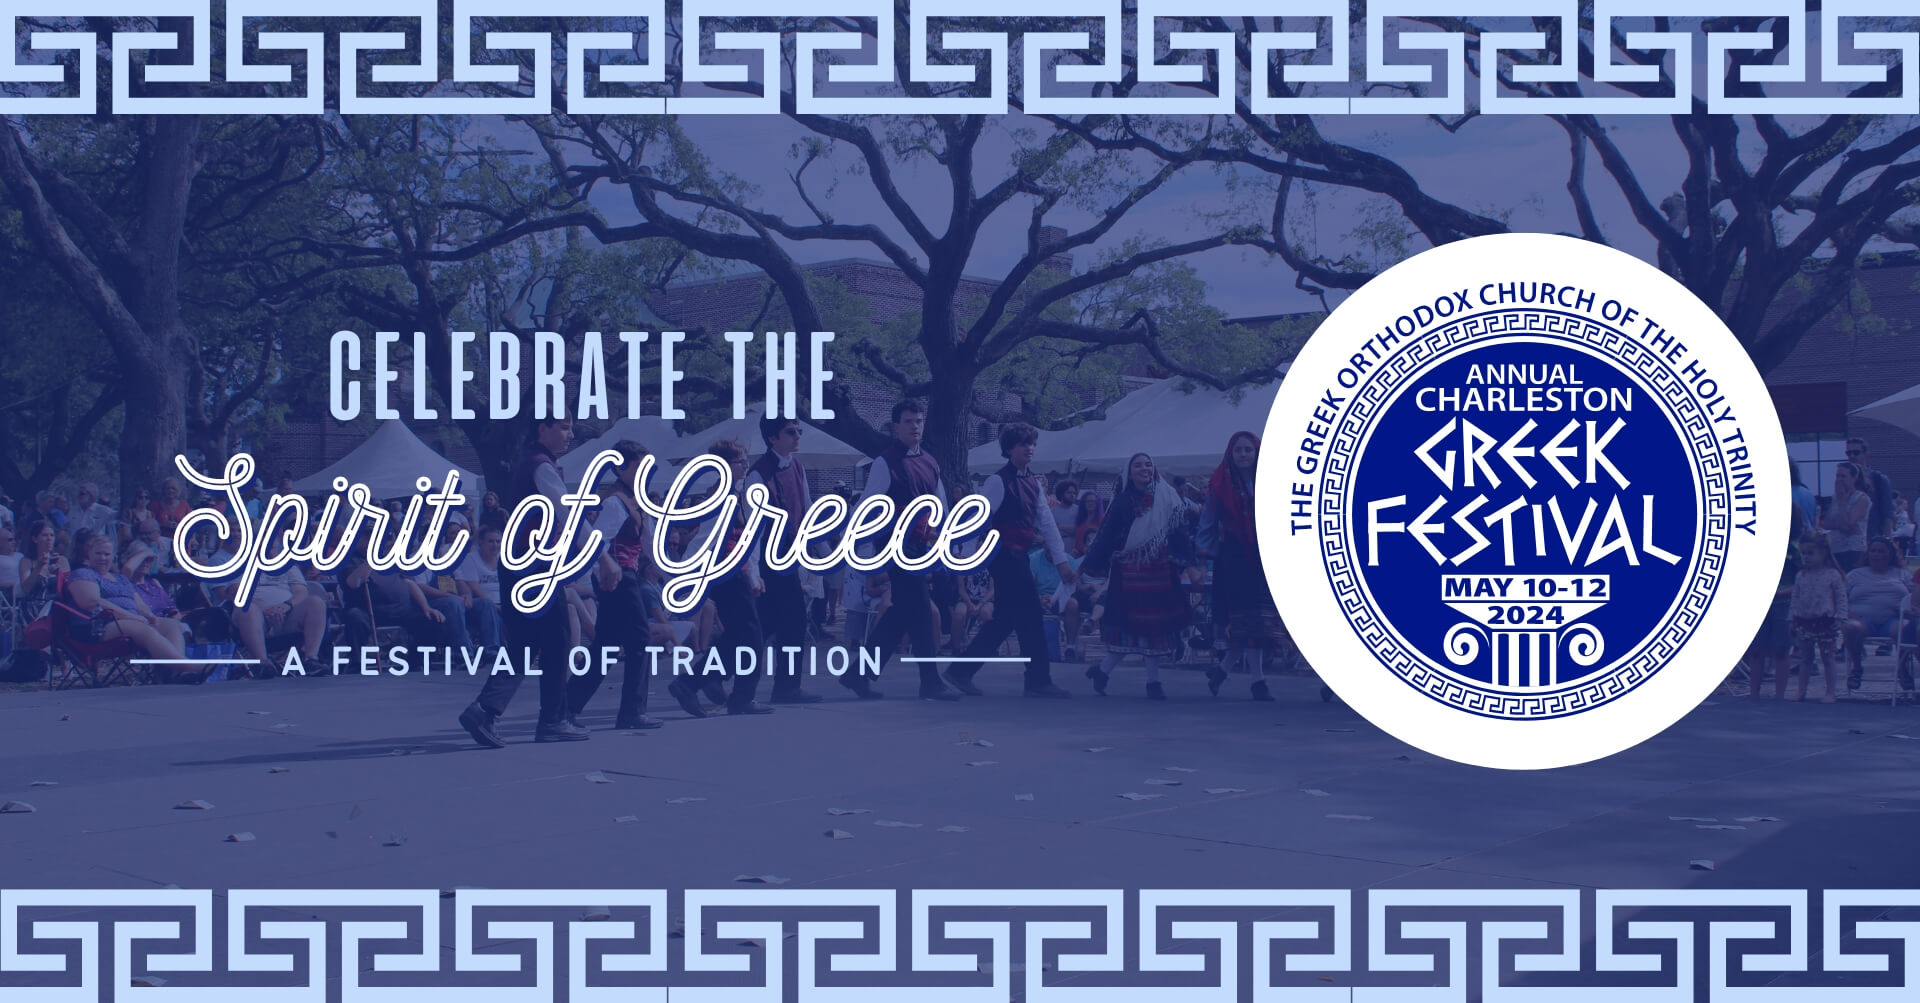 53rd Annual Charleston Greek Festival May 1012, 2024